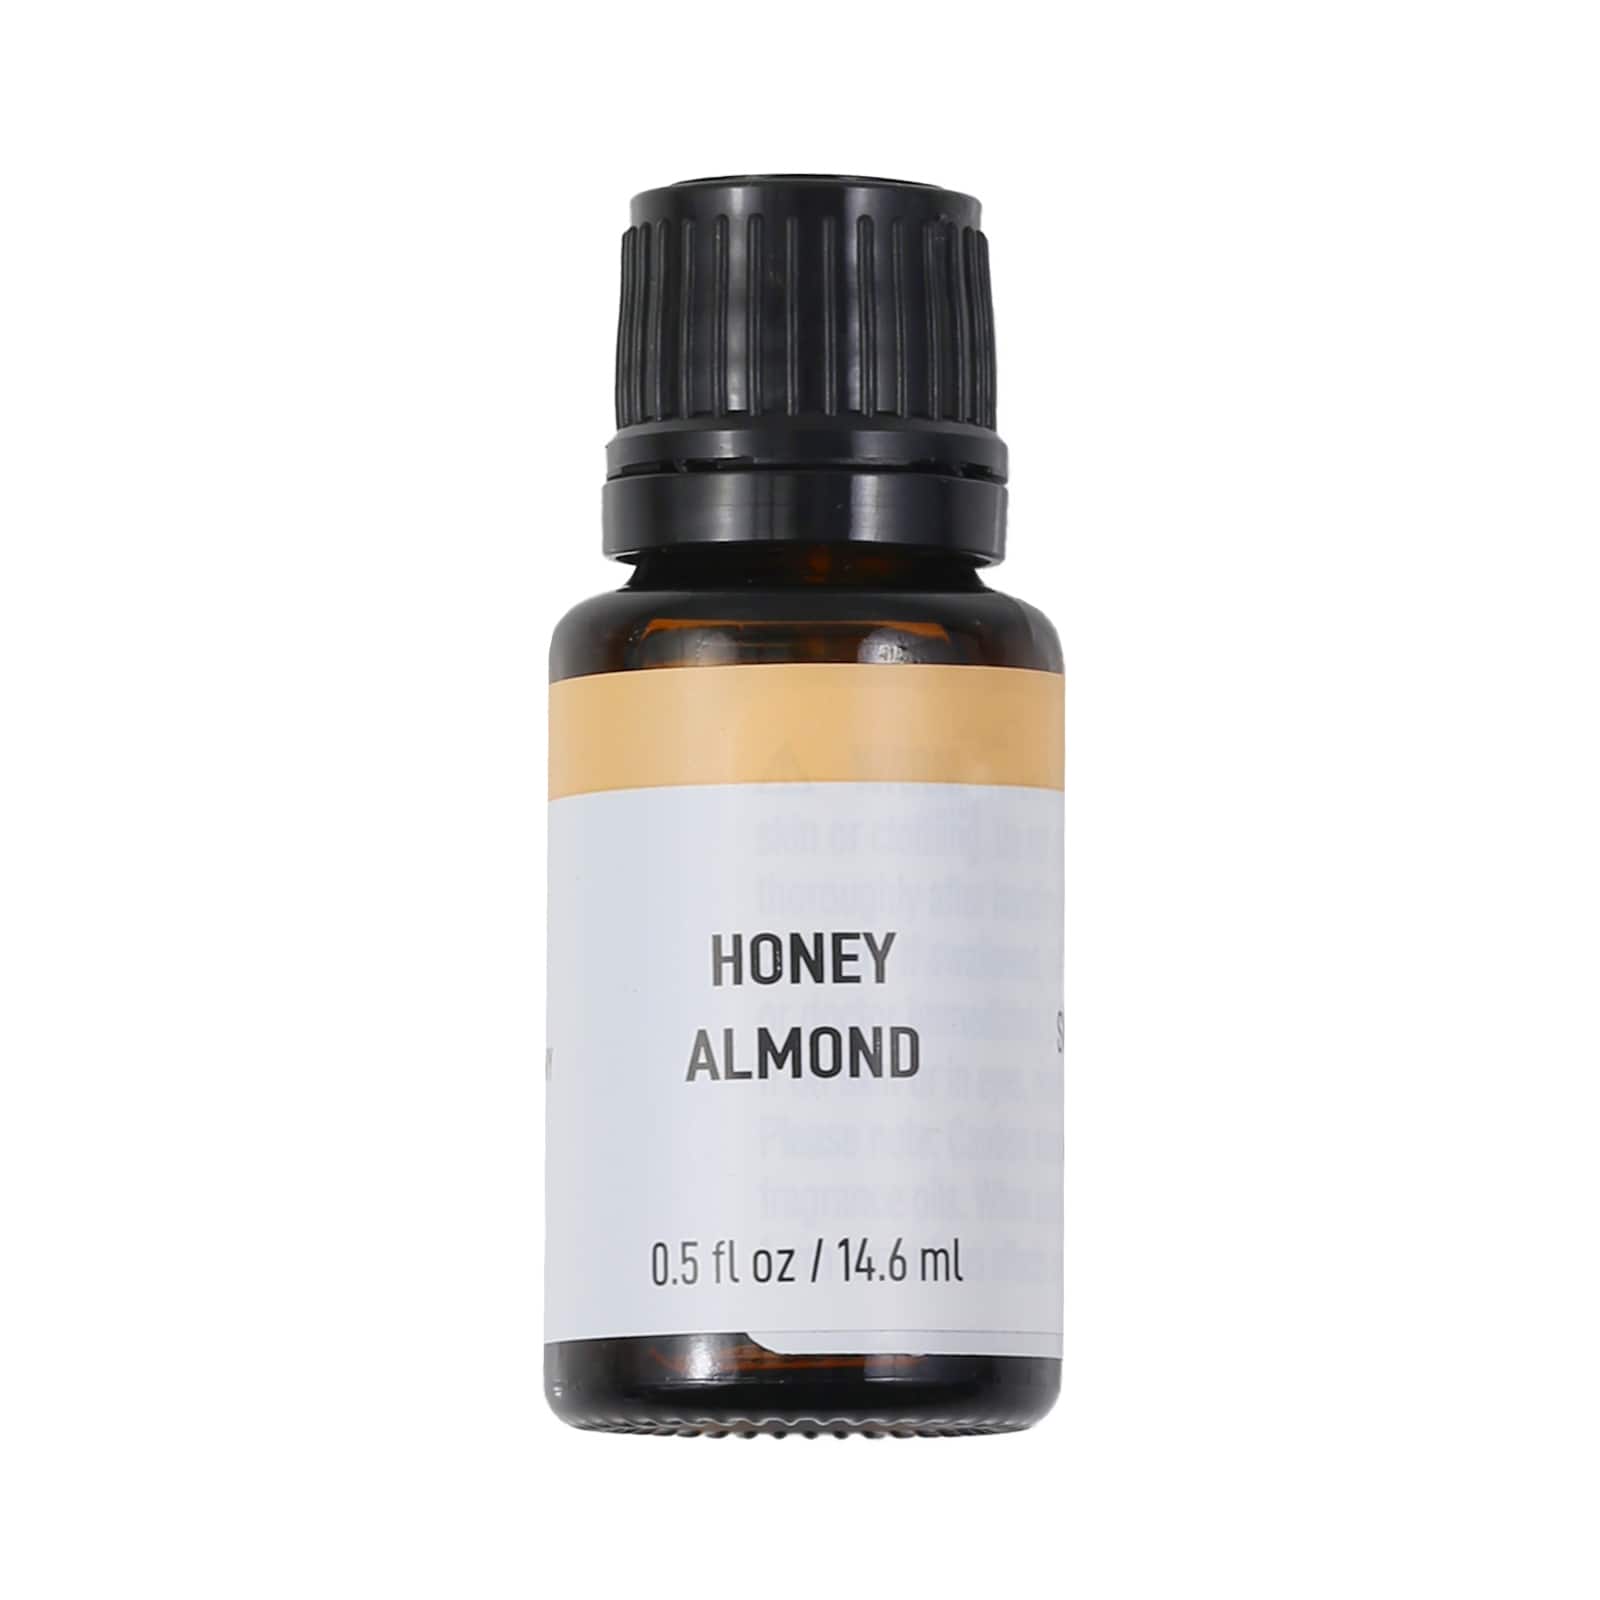 Hello Lovely 0.5 fl. oz Honey Almond Beauty Soap Fragrance